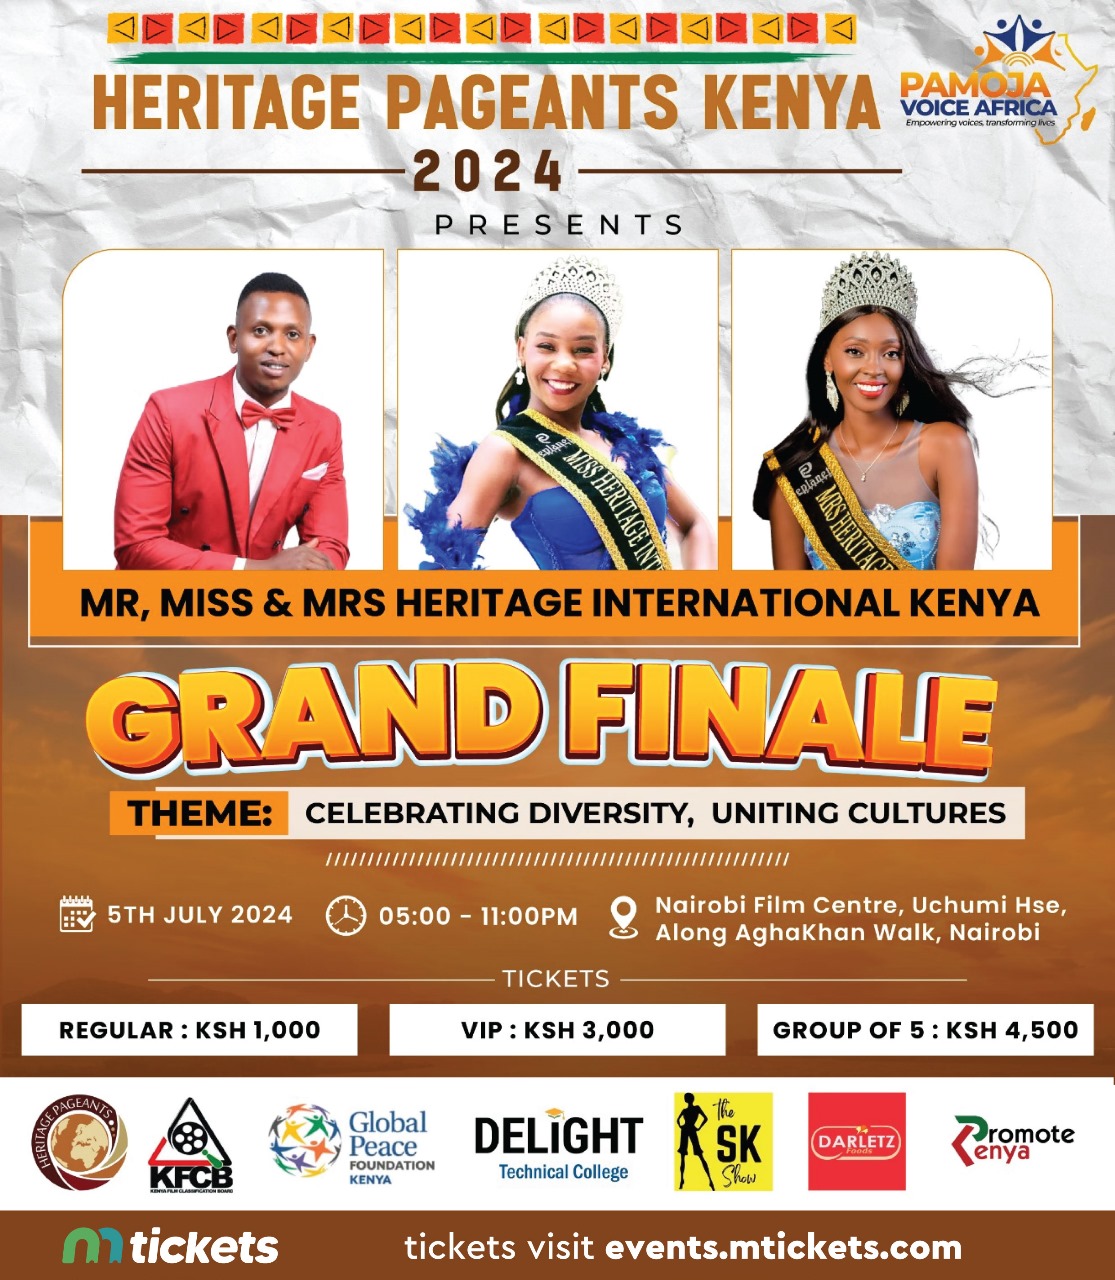 MR,MISS & MRS HERITAGE INTERNATIONAL KENYA